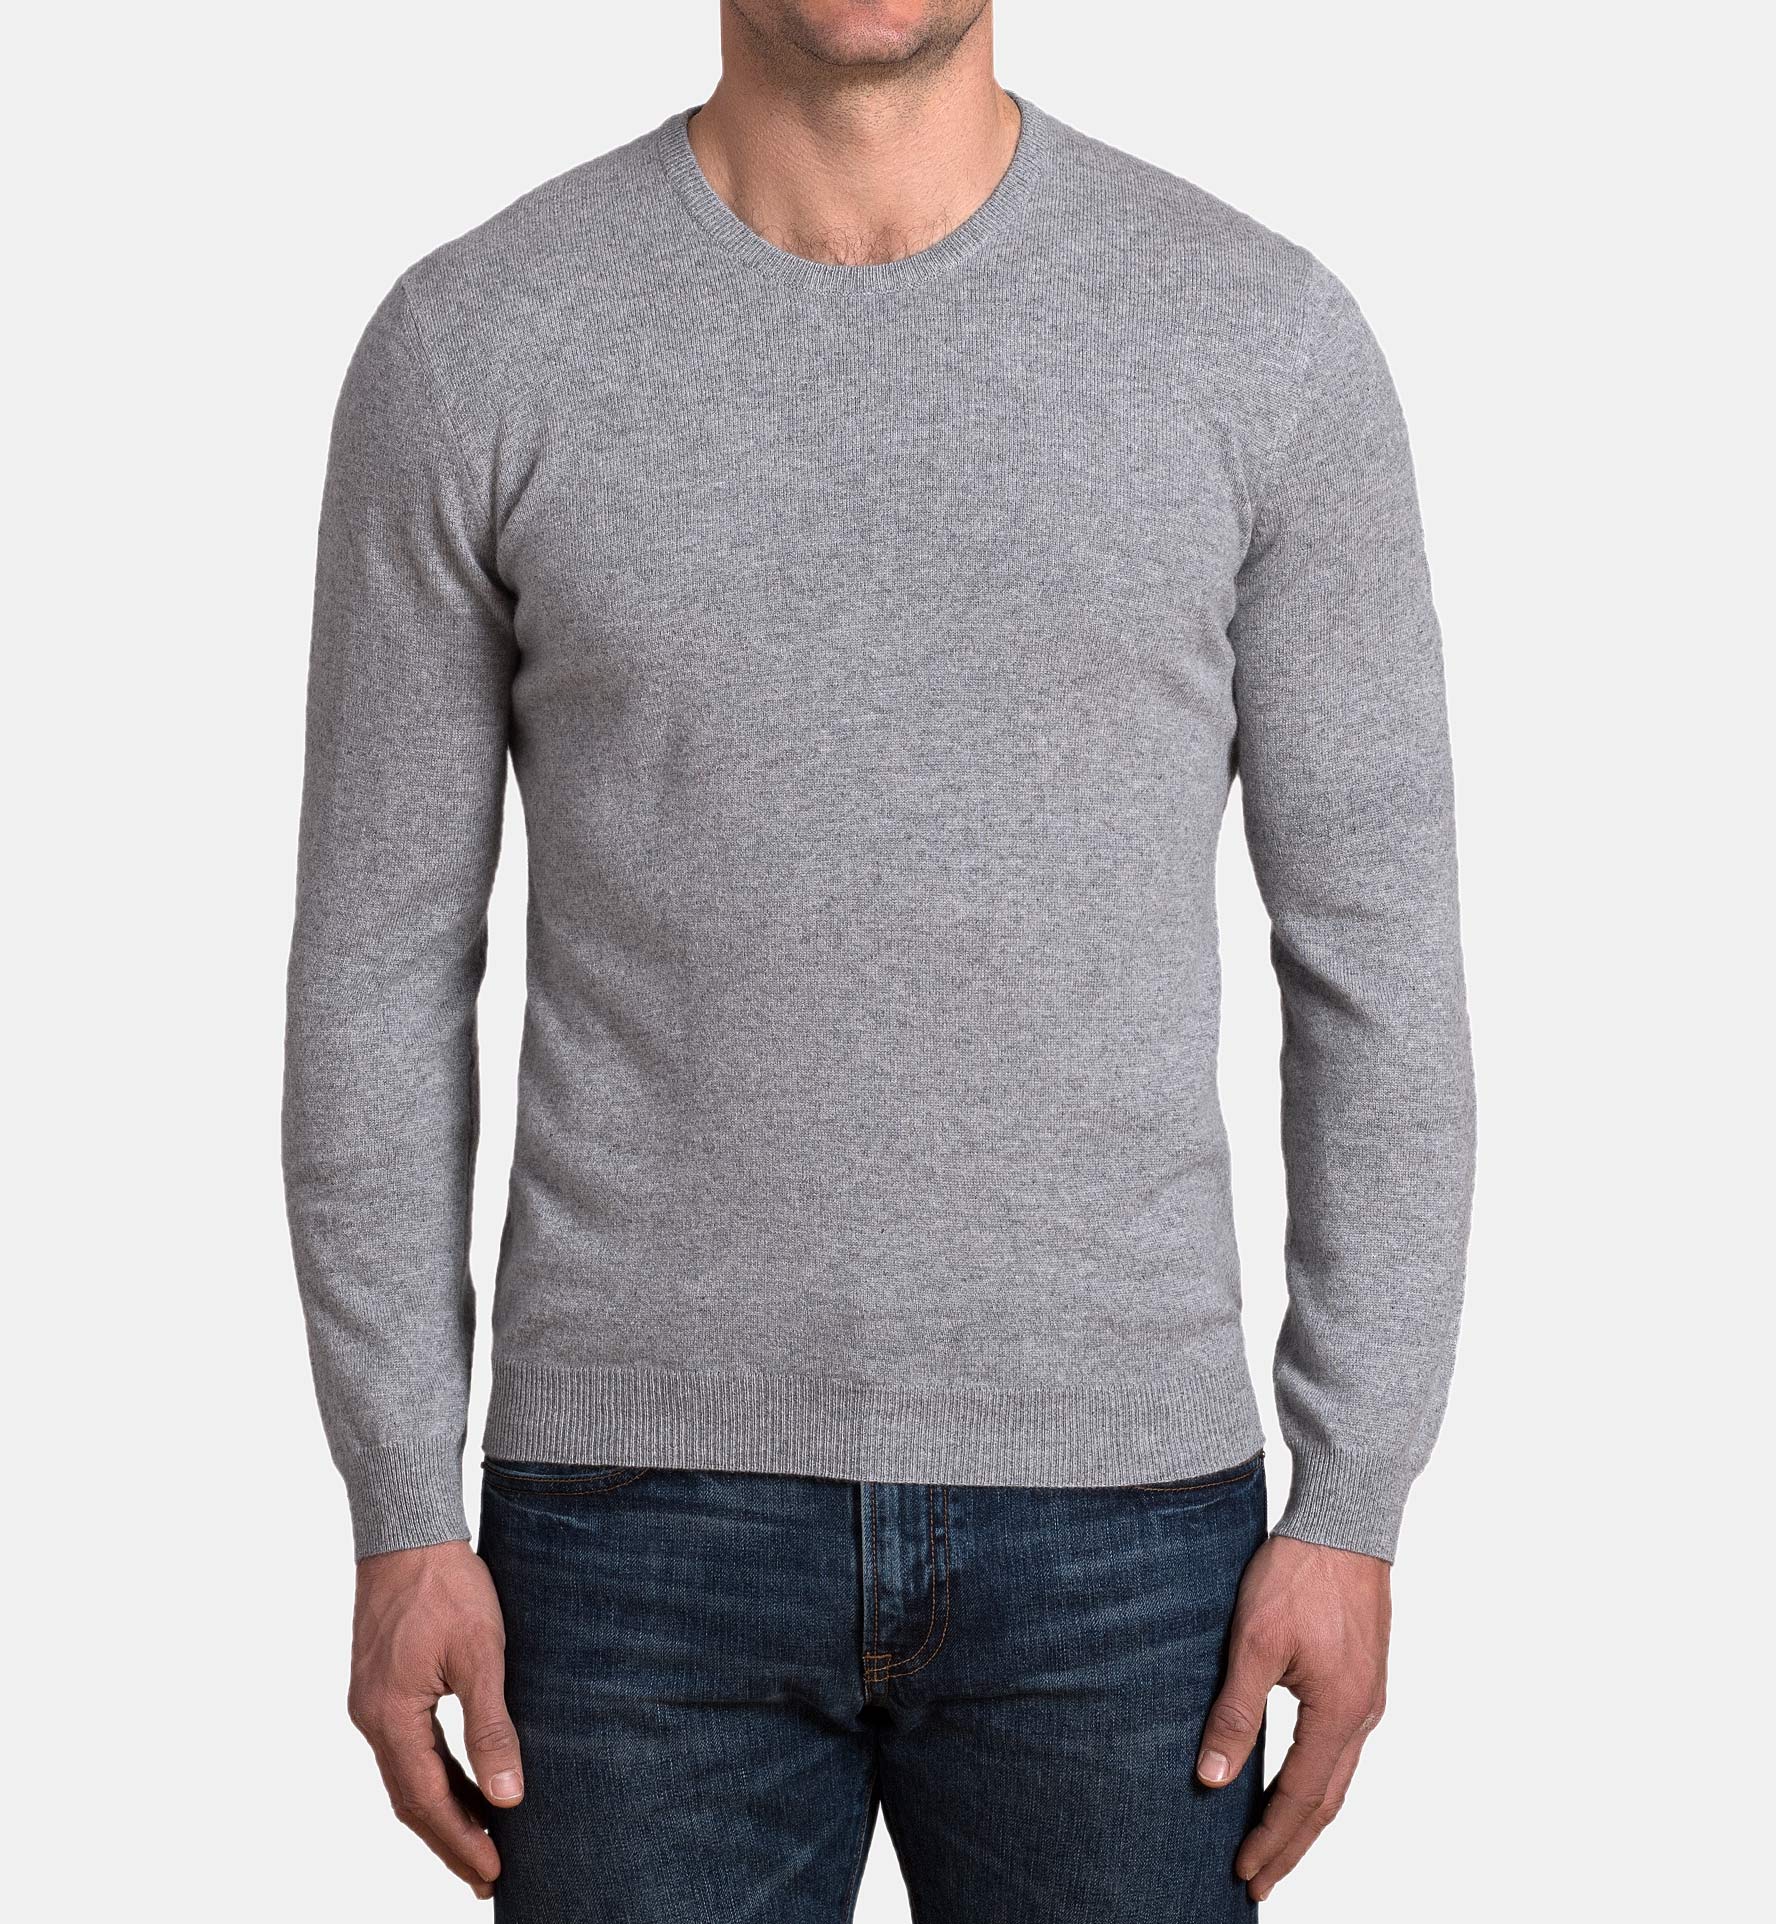 Light Grey Cashmere Crewneck Sweater by Proper Cloth